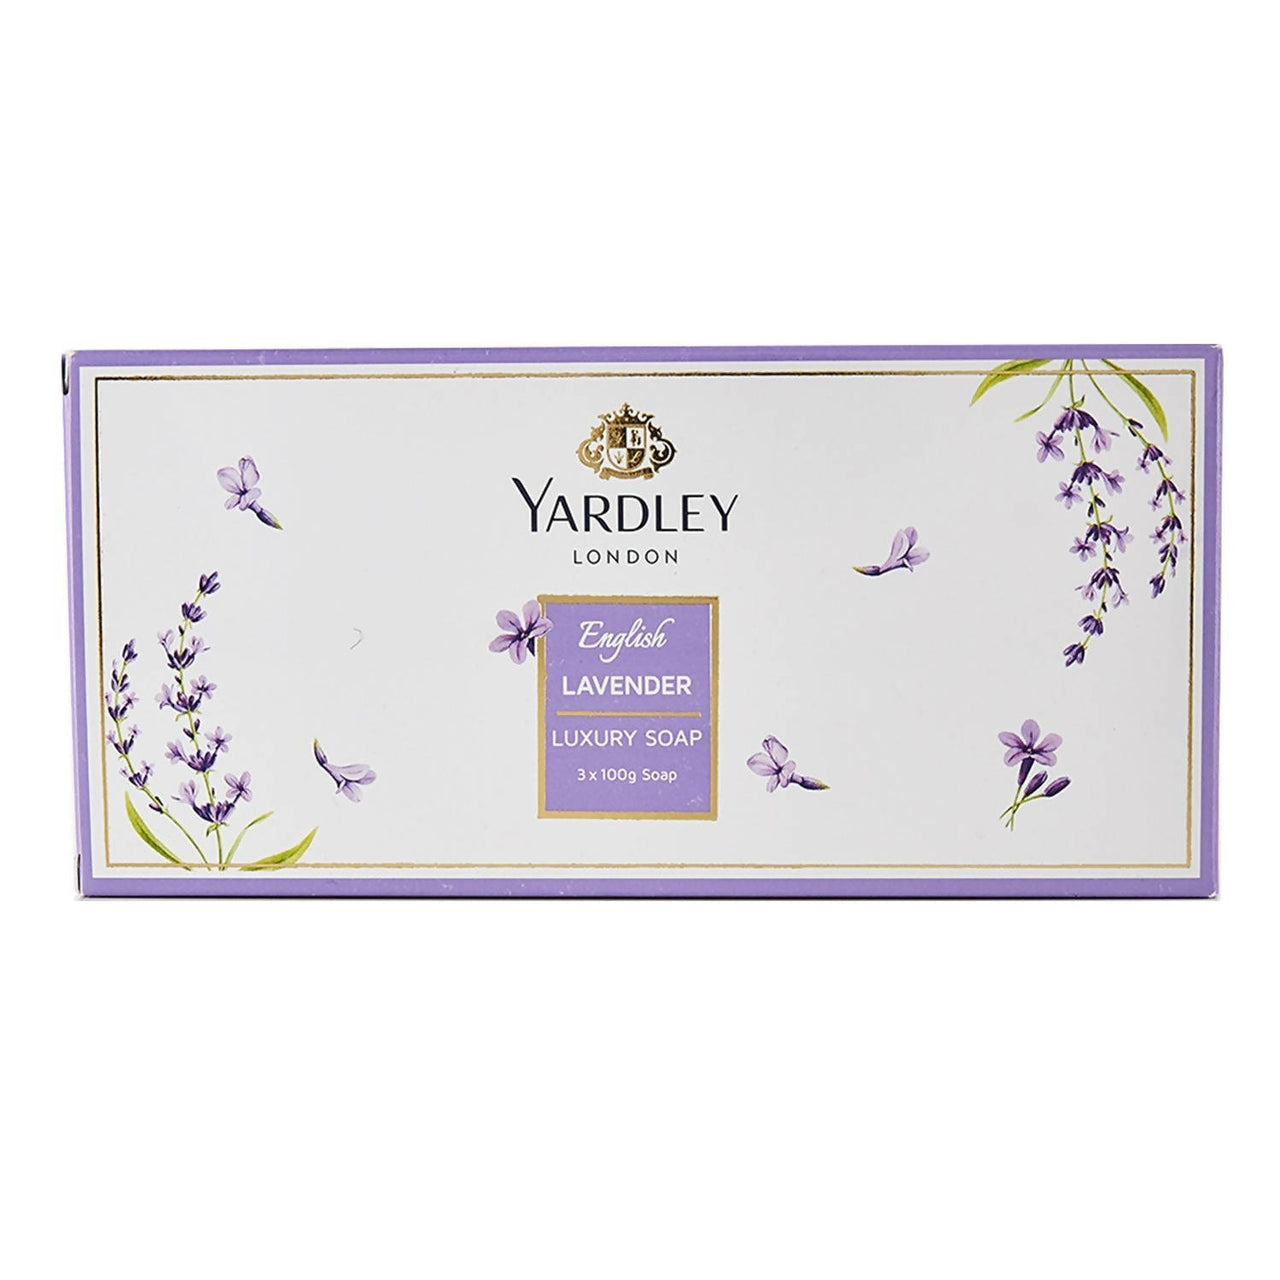 Yardley London English Lavendar And Rose Luxury Soap